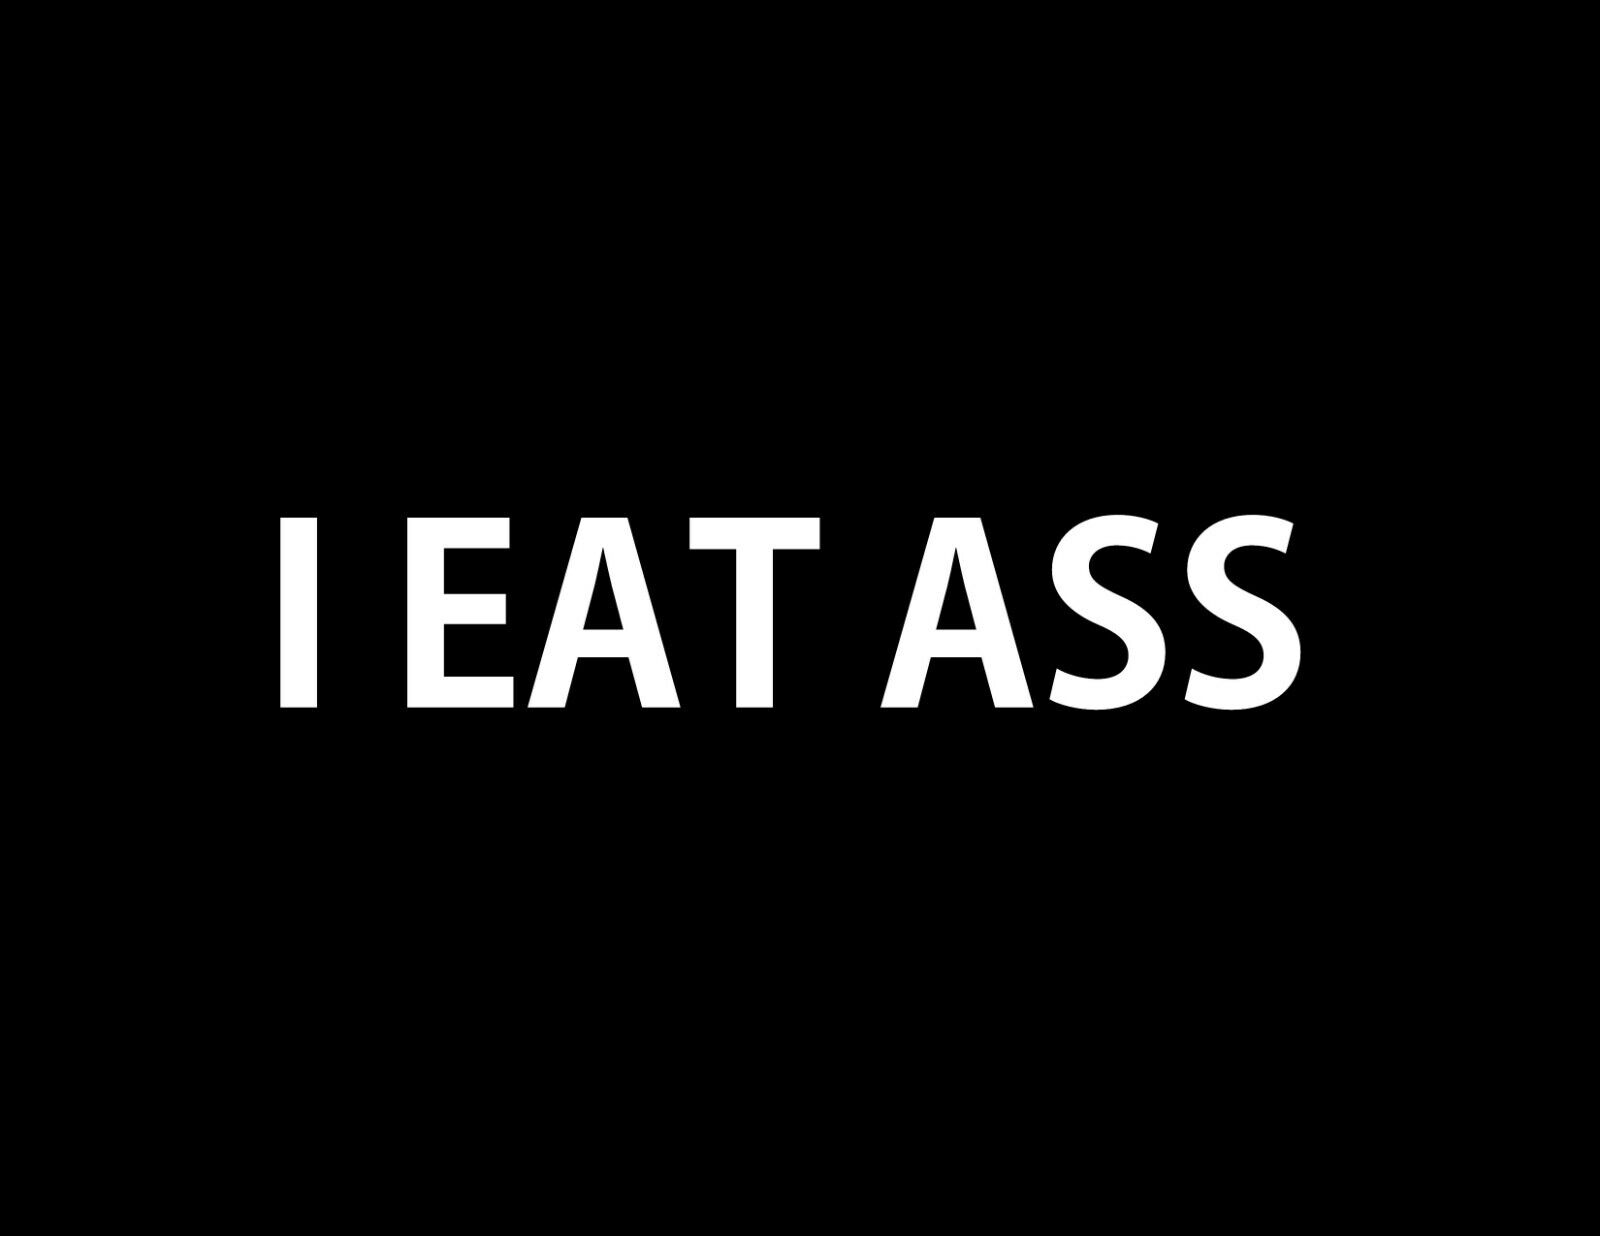 I Eat Ass Sticker - Funny Booty F It Butt I Heart Salad Vinyl Decal Car Truck